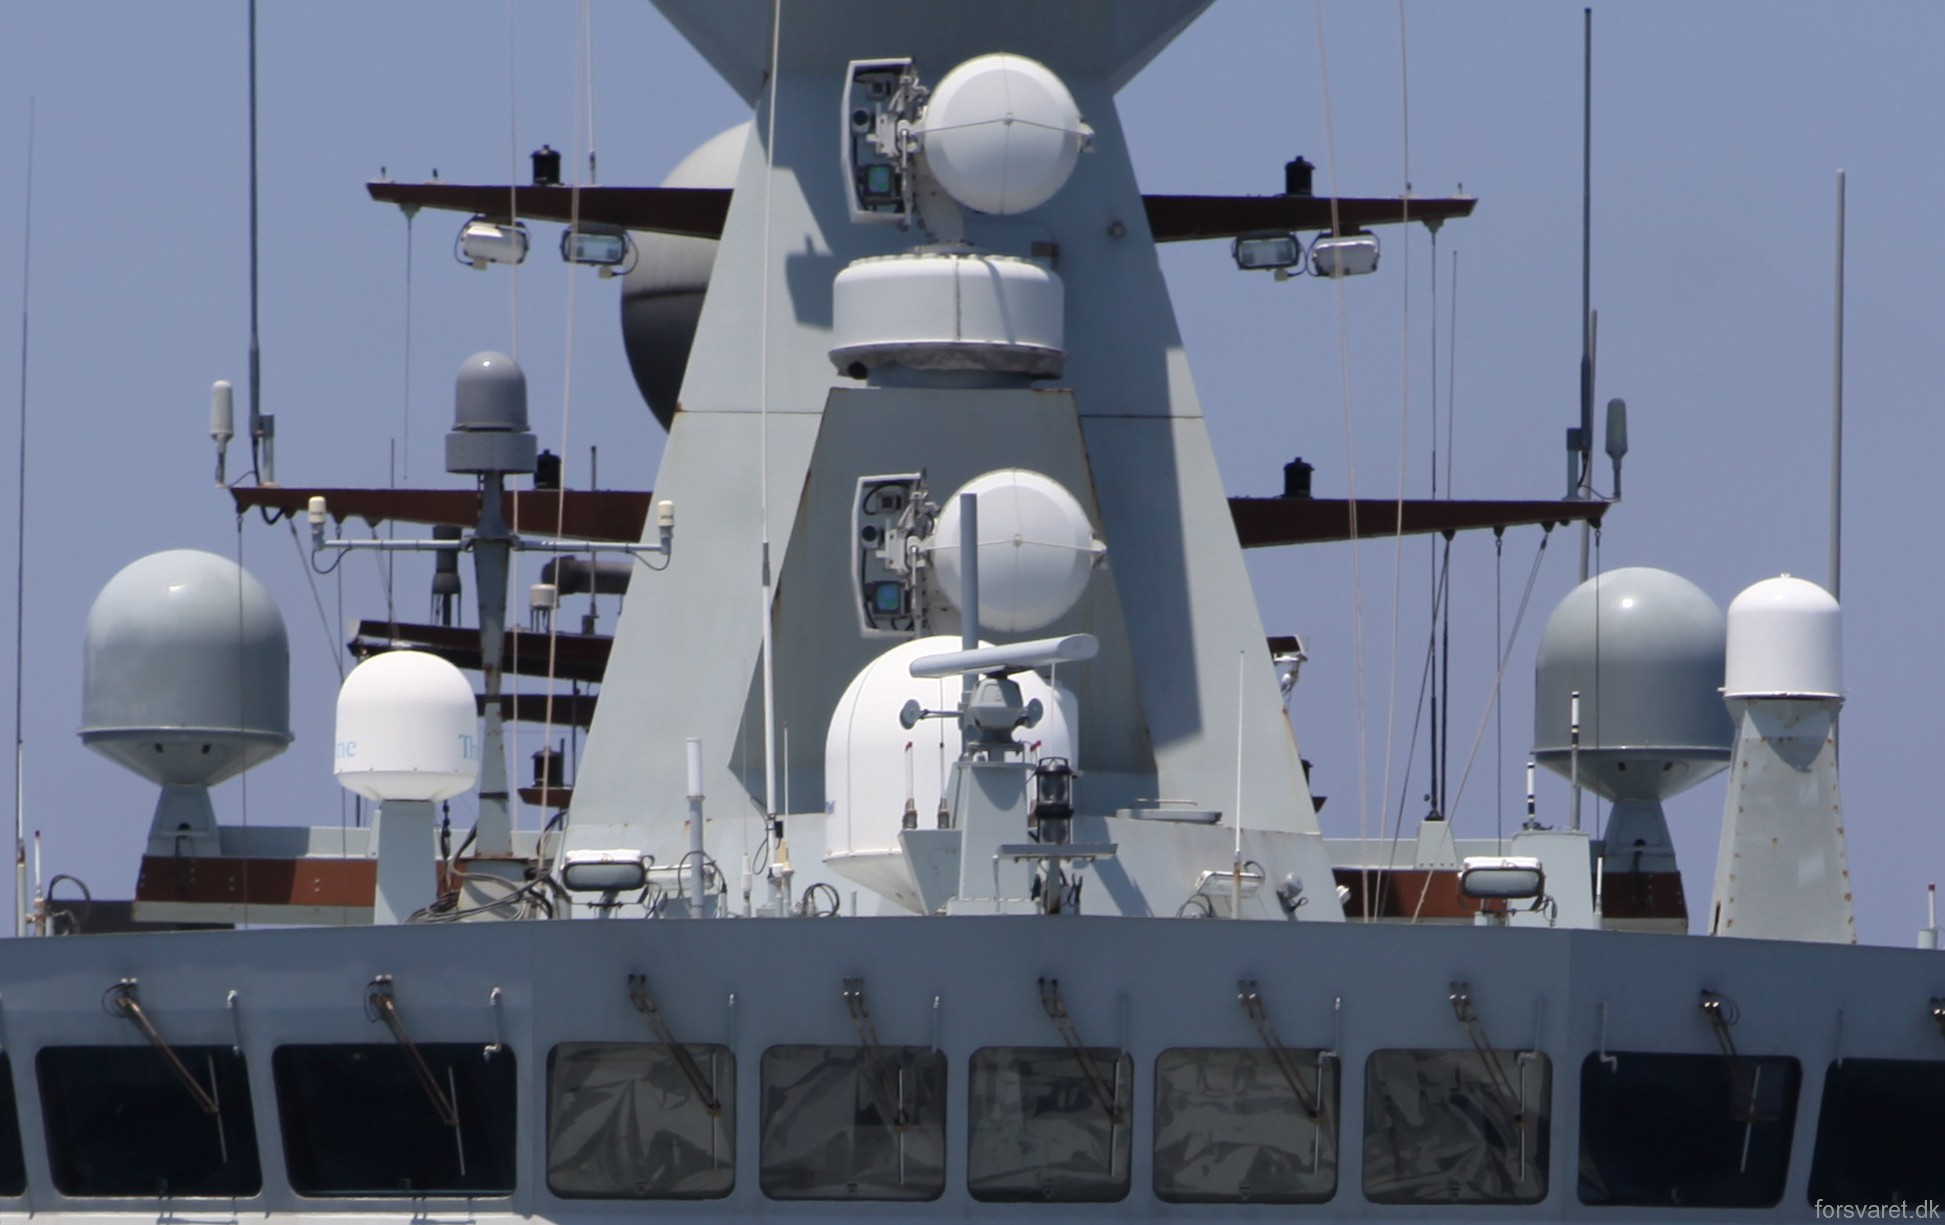 f-342 hdms esbern snare l-17 frigate command support ship royal danish navy 23